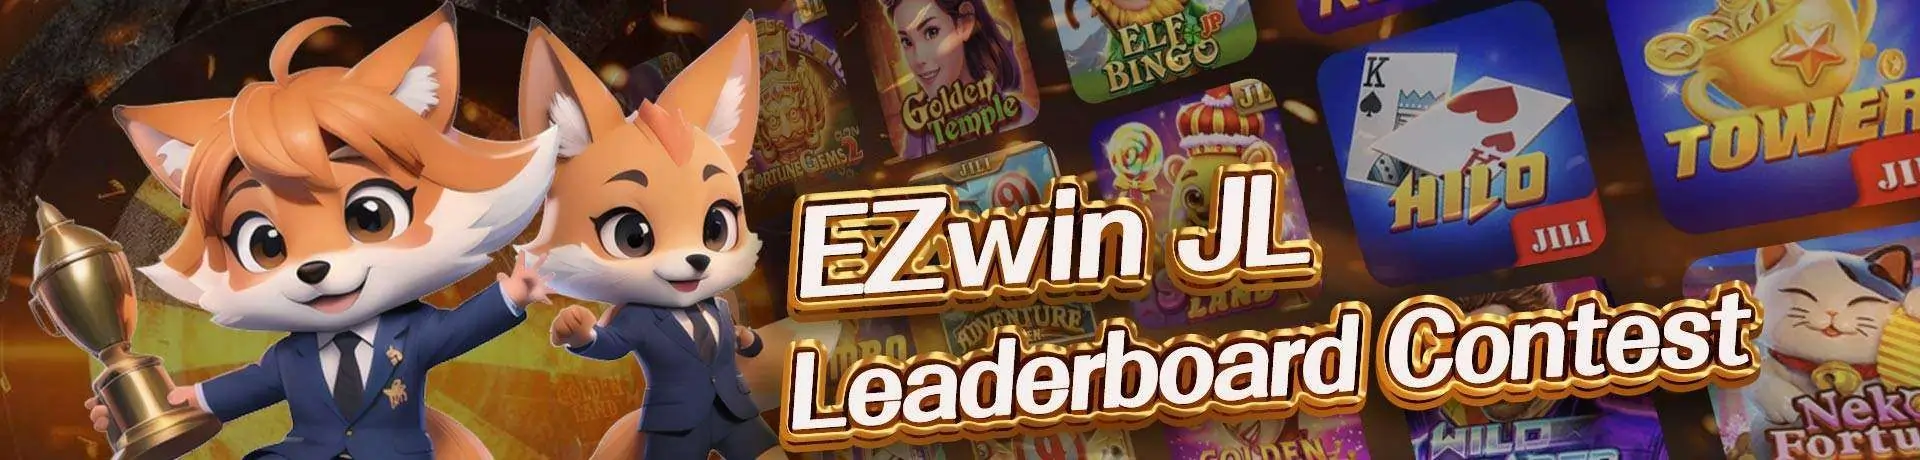 ezwin leaderboard